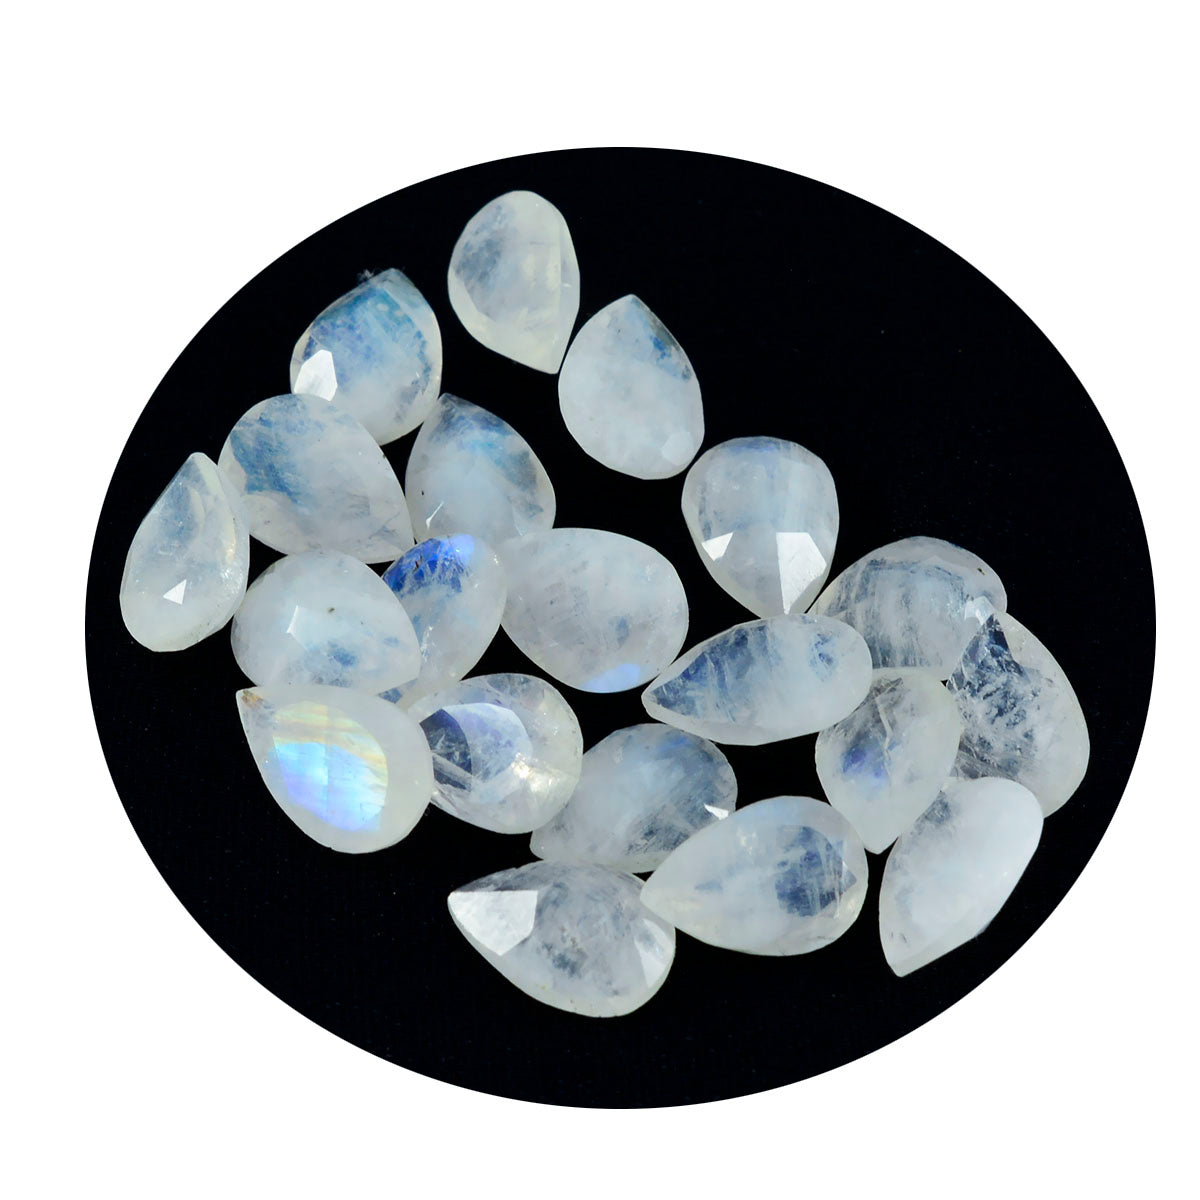 Riyogems 1PC White Rainbow Moonstone Faceted 5x7 mm Pear Shape good-looking Quality Gems